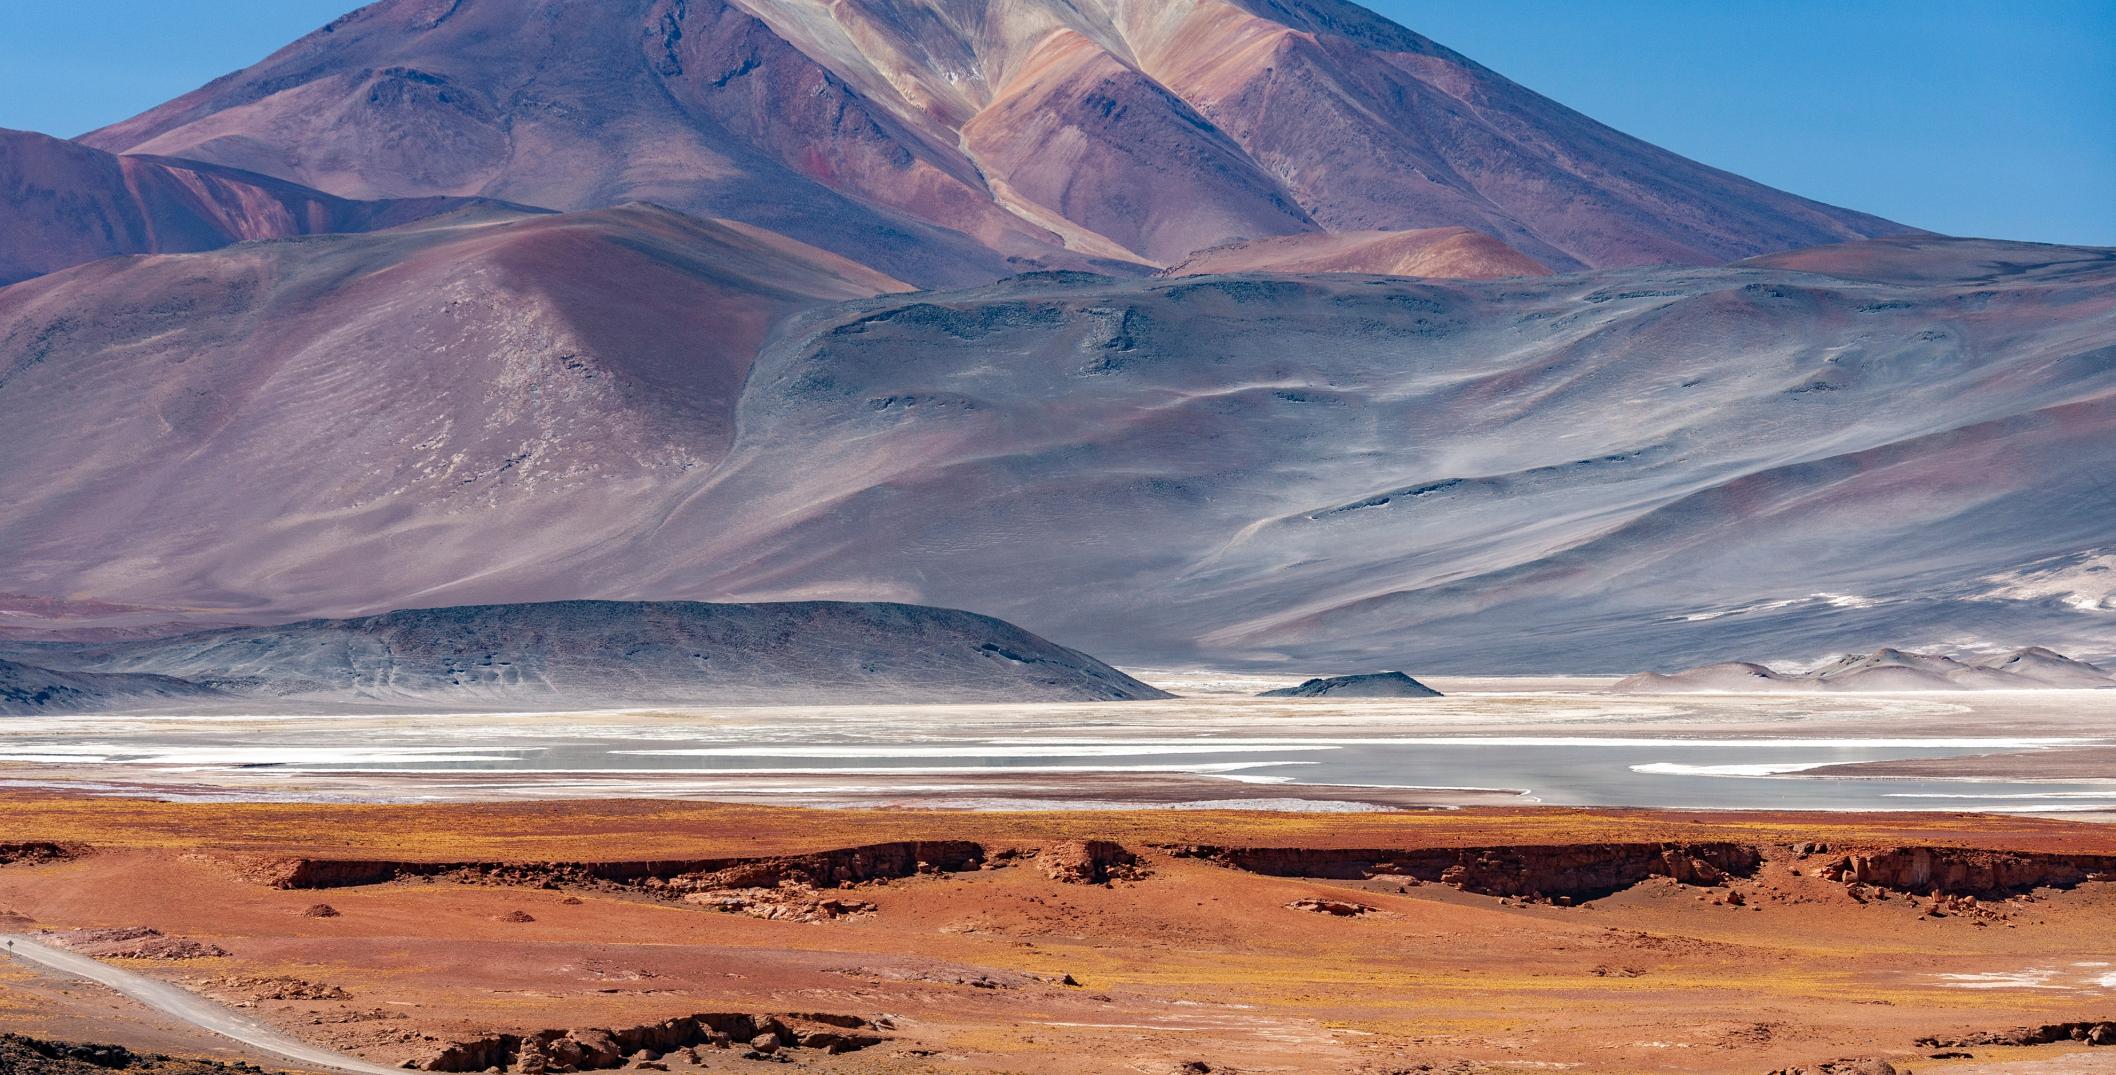 Alues Calientes salt flats near mountains in the Atacama Desert, Chile